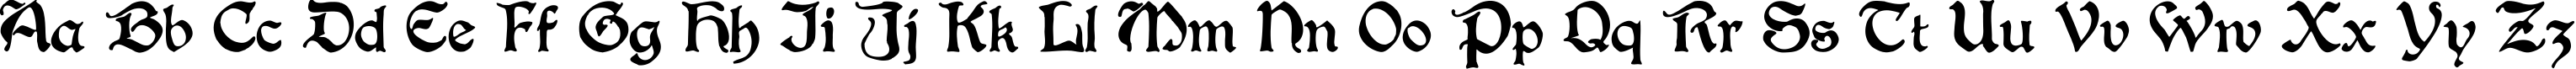 Пример написания английского алфавита шрифтом BoisterBlack